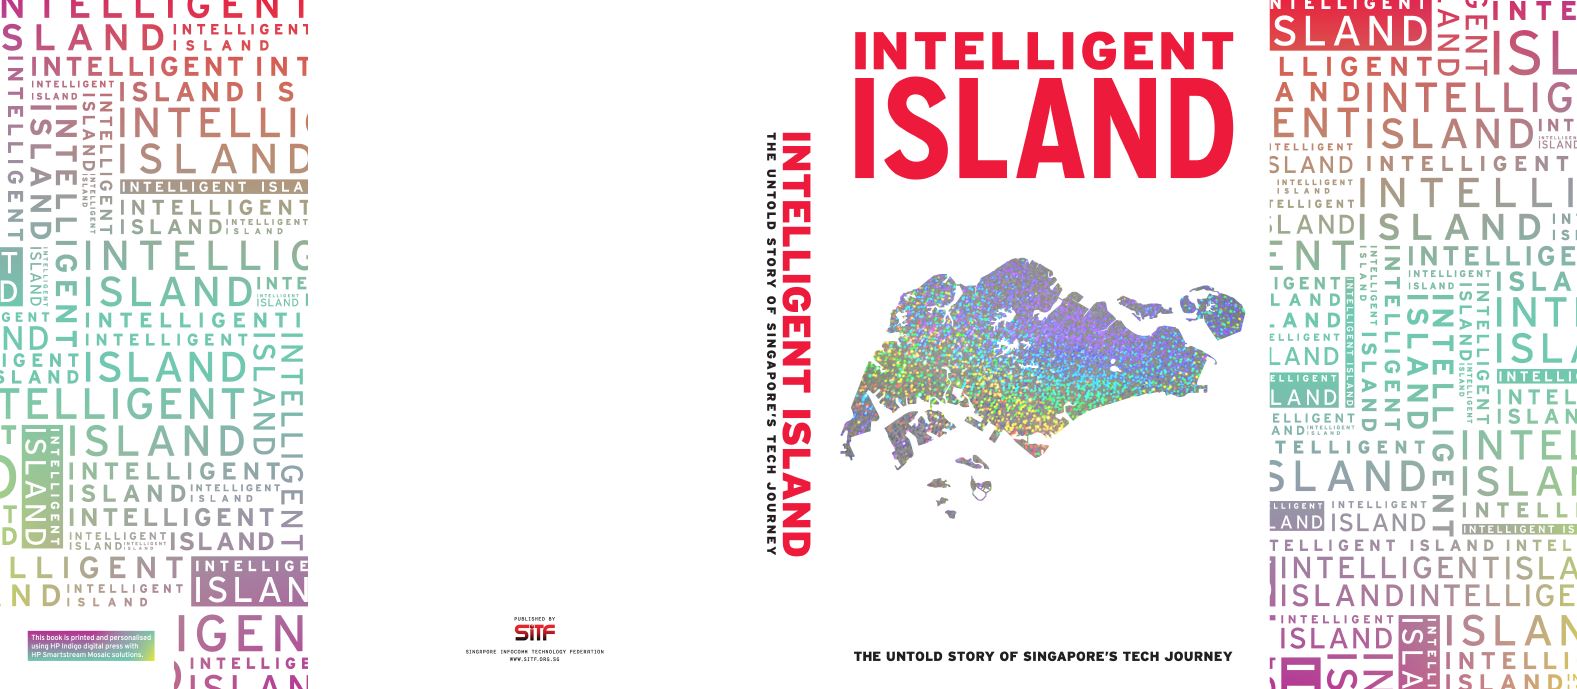 20170824 intelligent island book cover